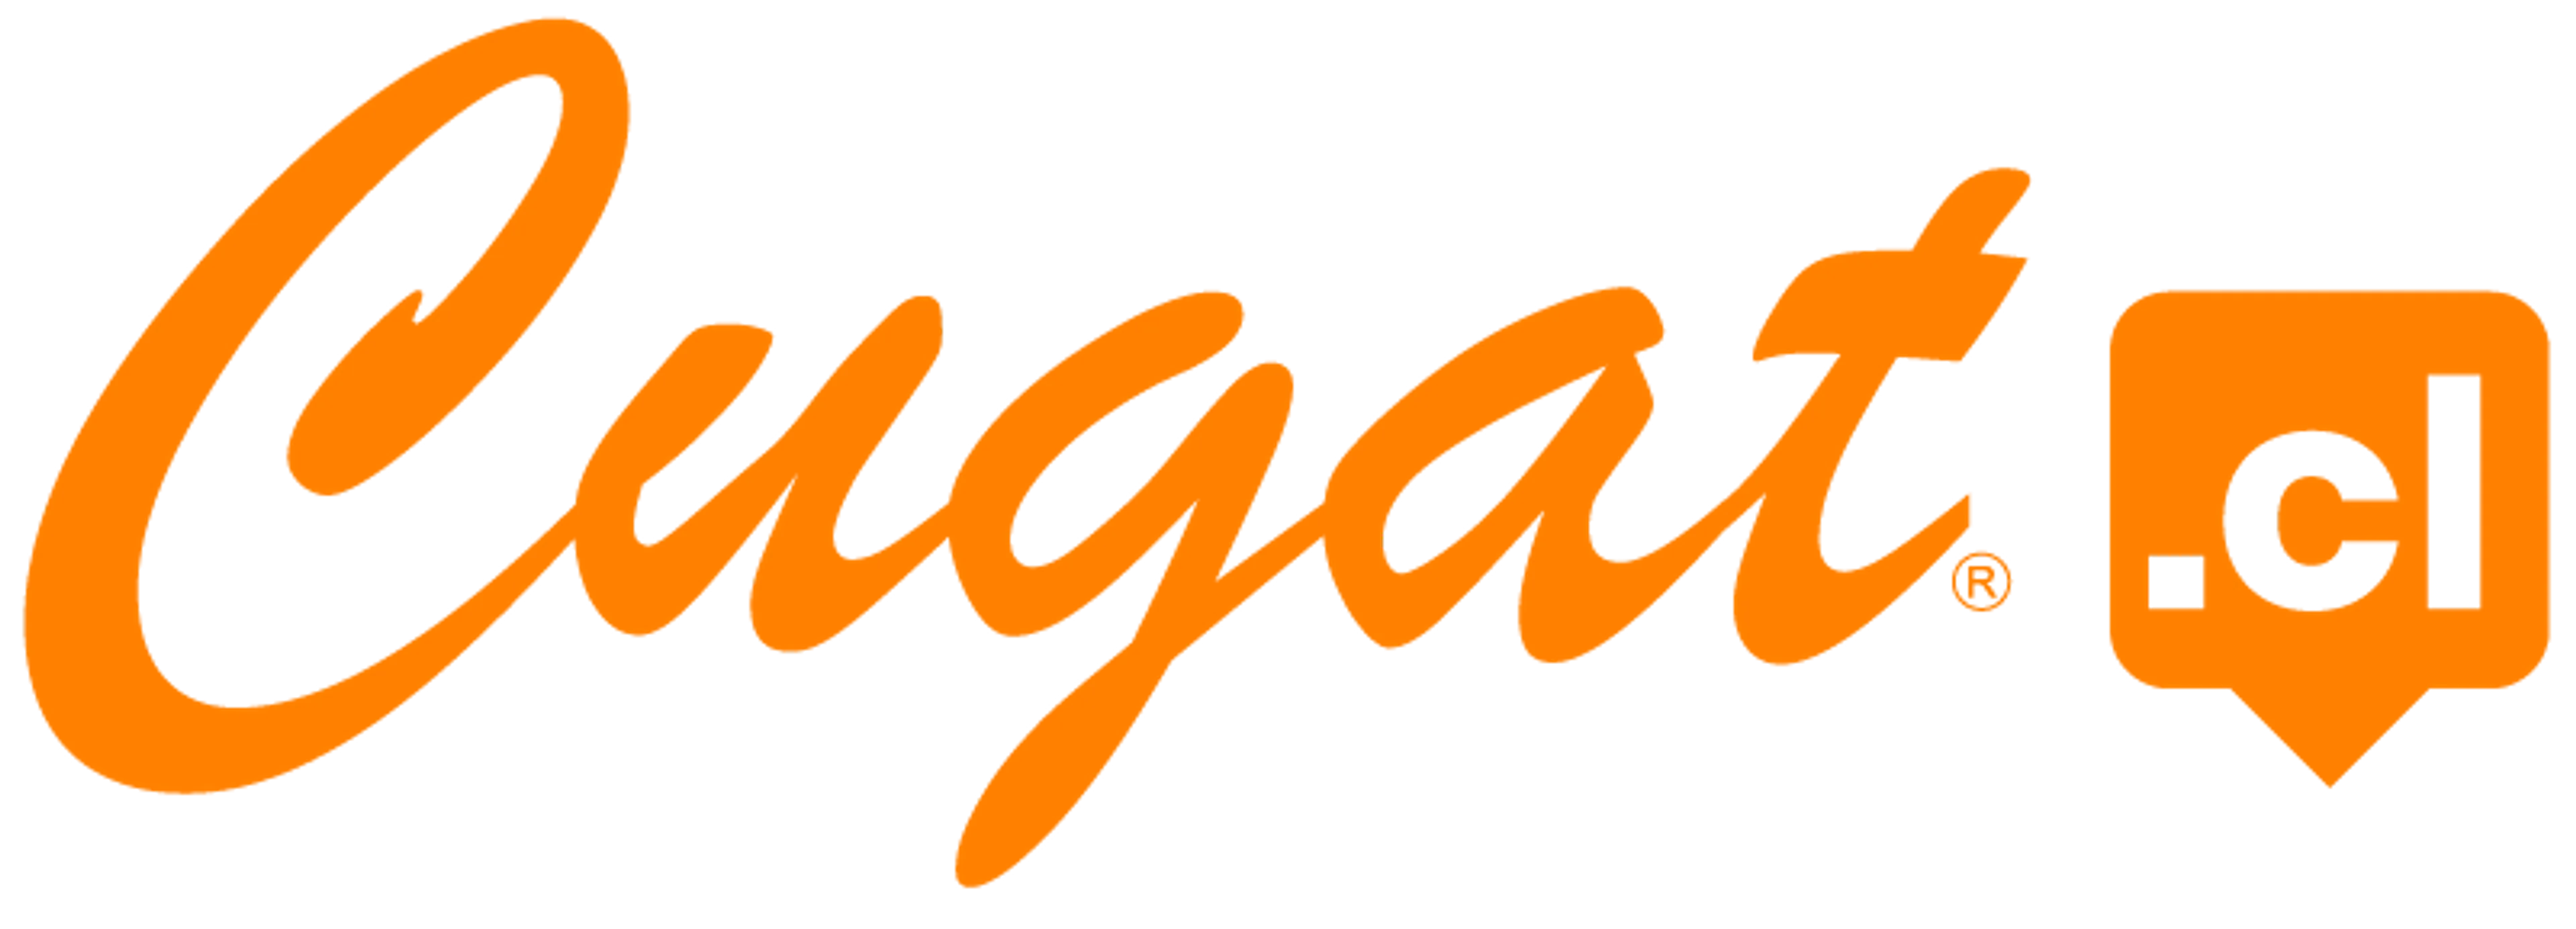 CUGAT logo